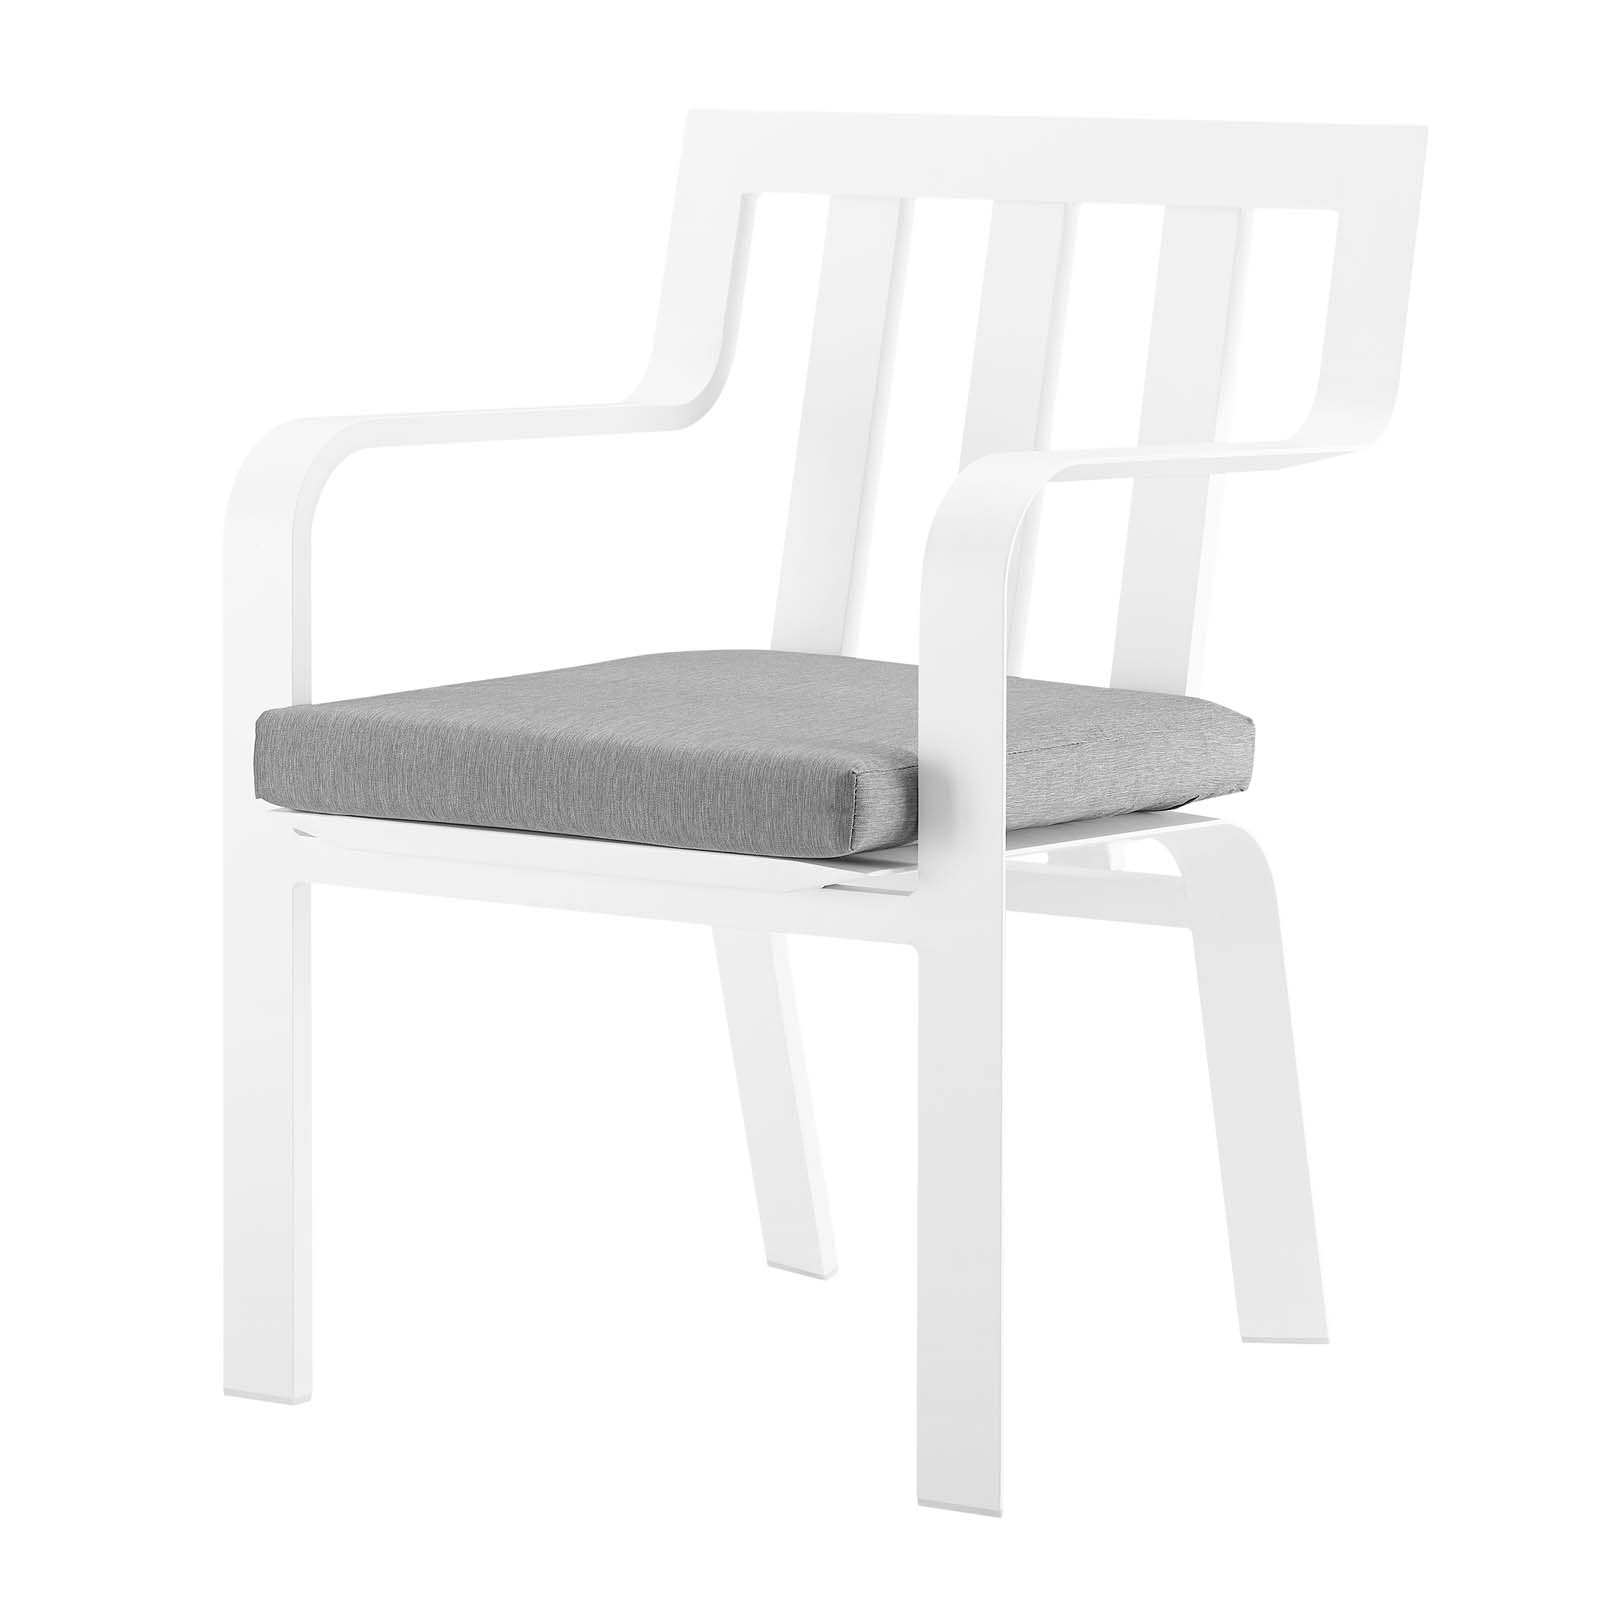 Contemporary Modern Urban Designer Outdoor Patio Balcony Garden Furniture Side Dining Armchair Chair, Fabric Aluminum, White Grey Gray - image 1 of 6